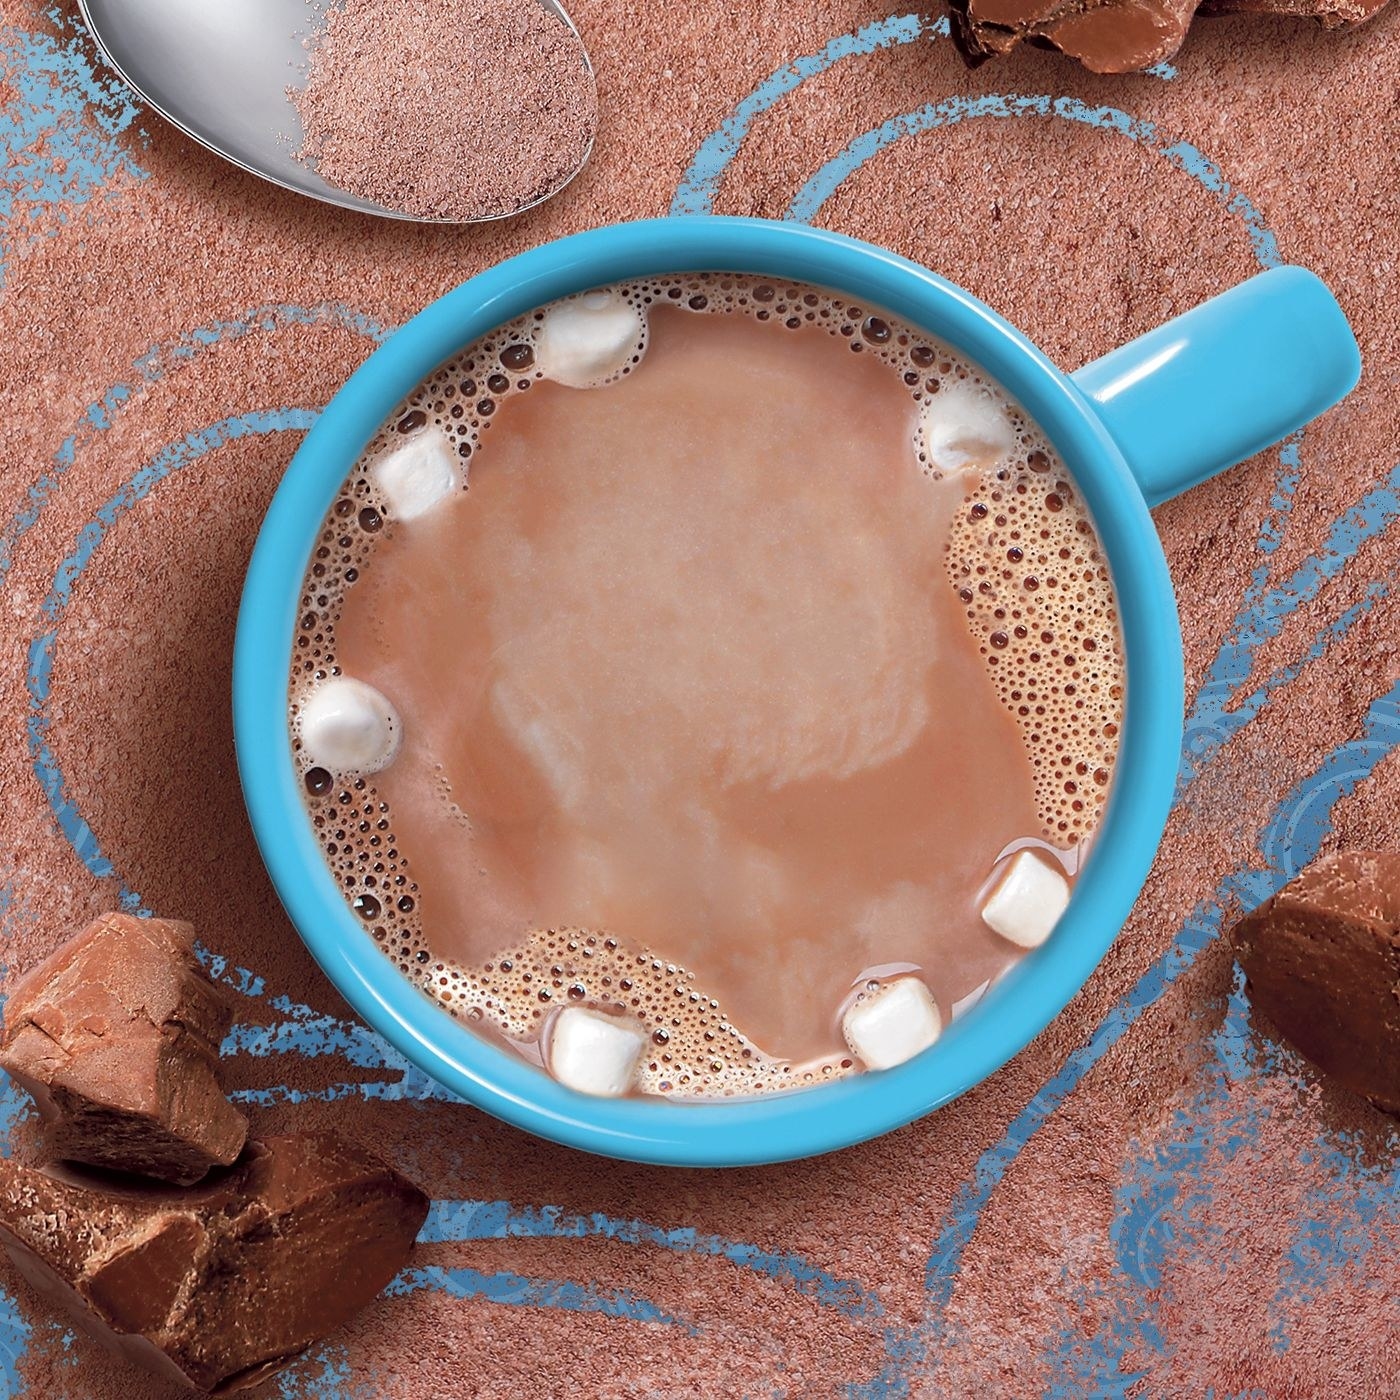 A blue mug full of hot chocolate